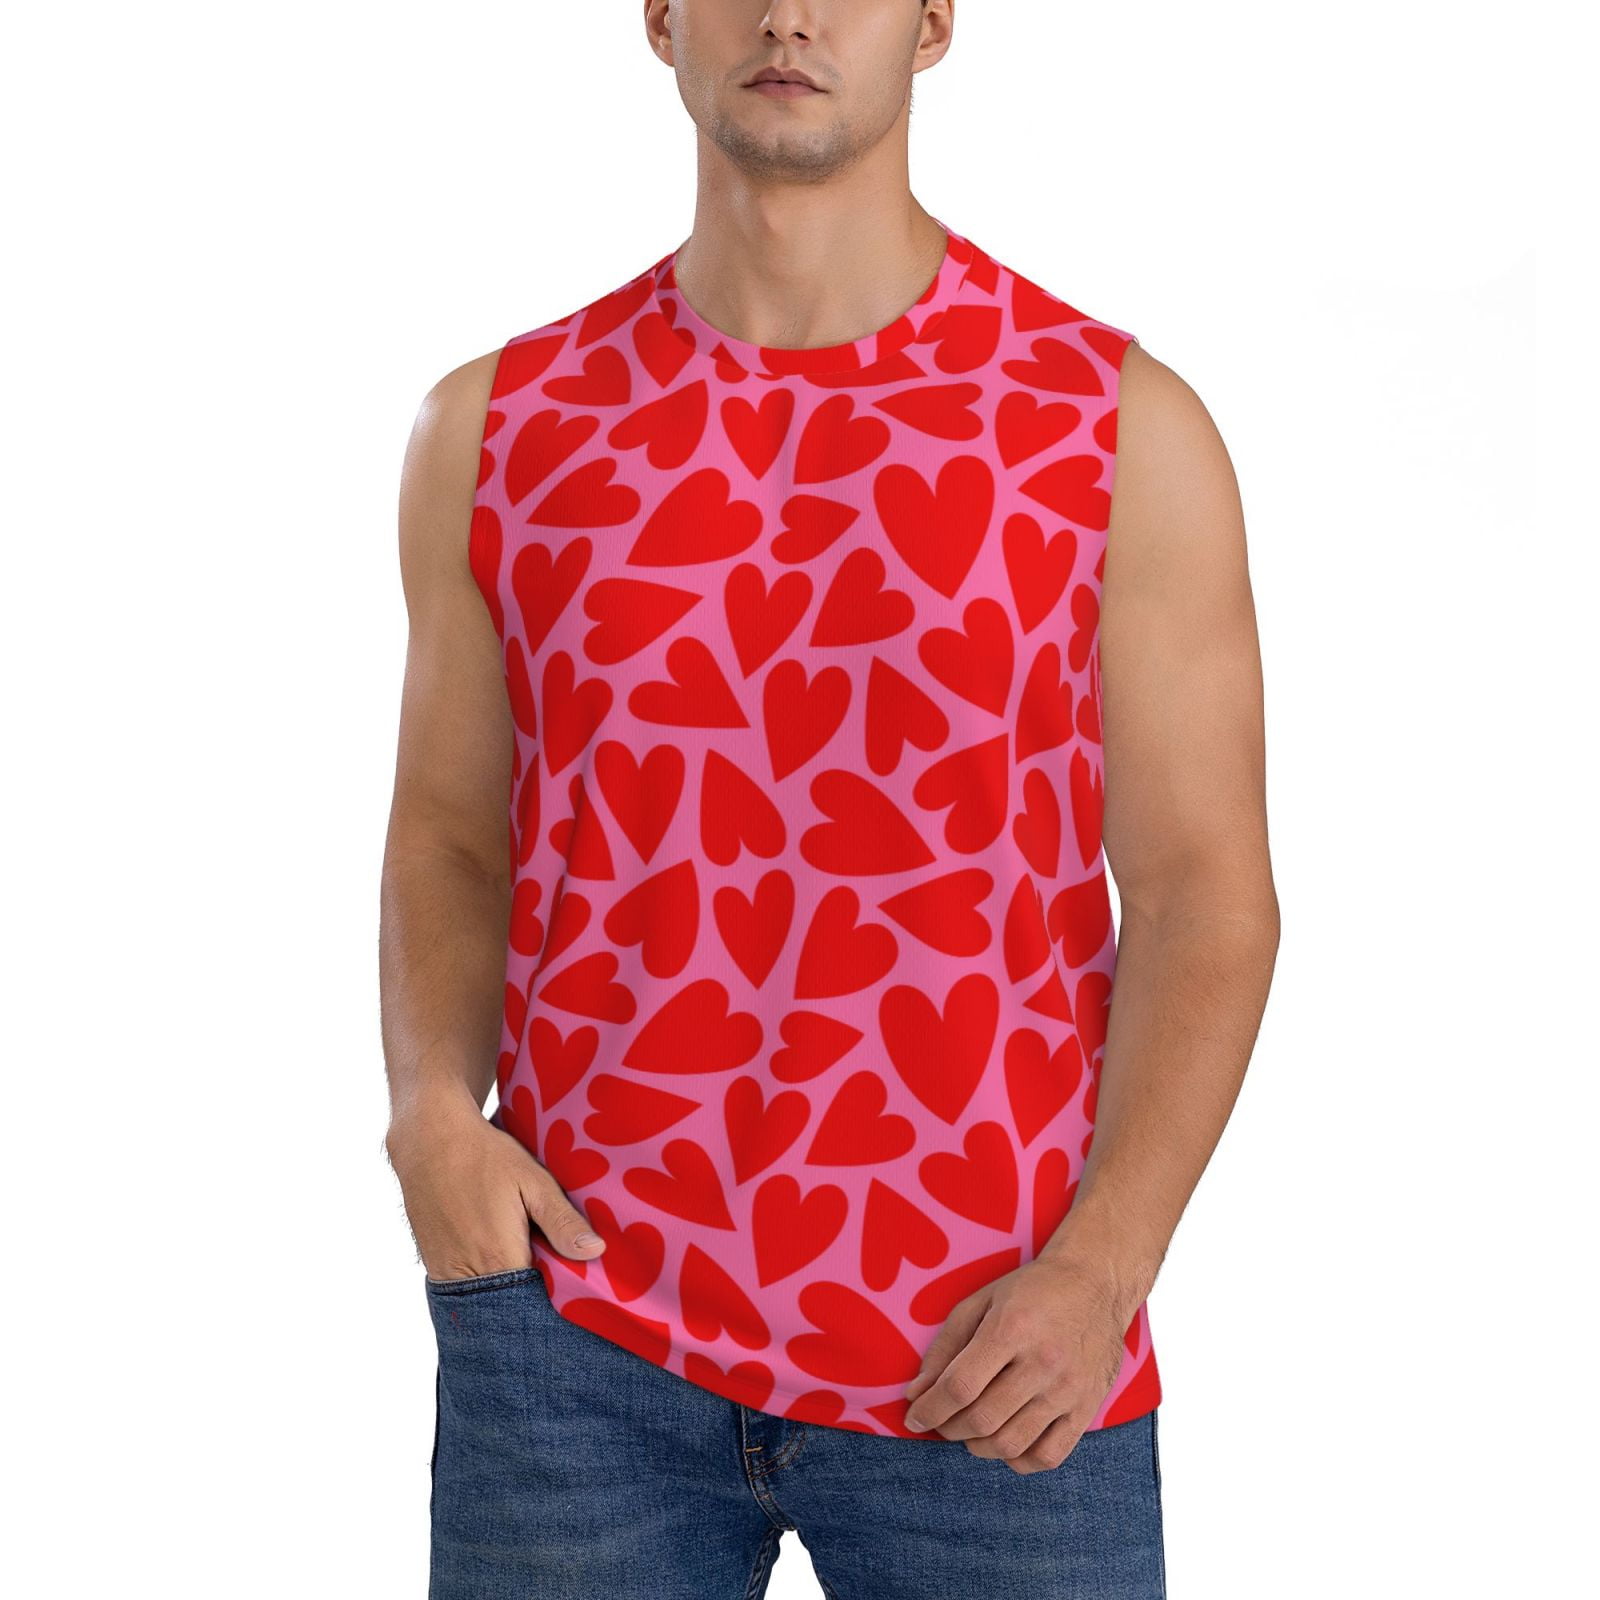 Ocsxa Red Love Heart Print Workout Tank Tops Gym Sleeveless Fitness ...